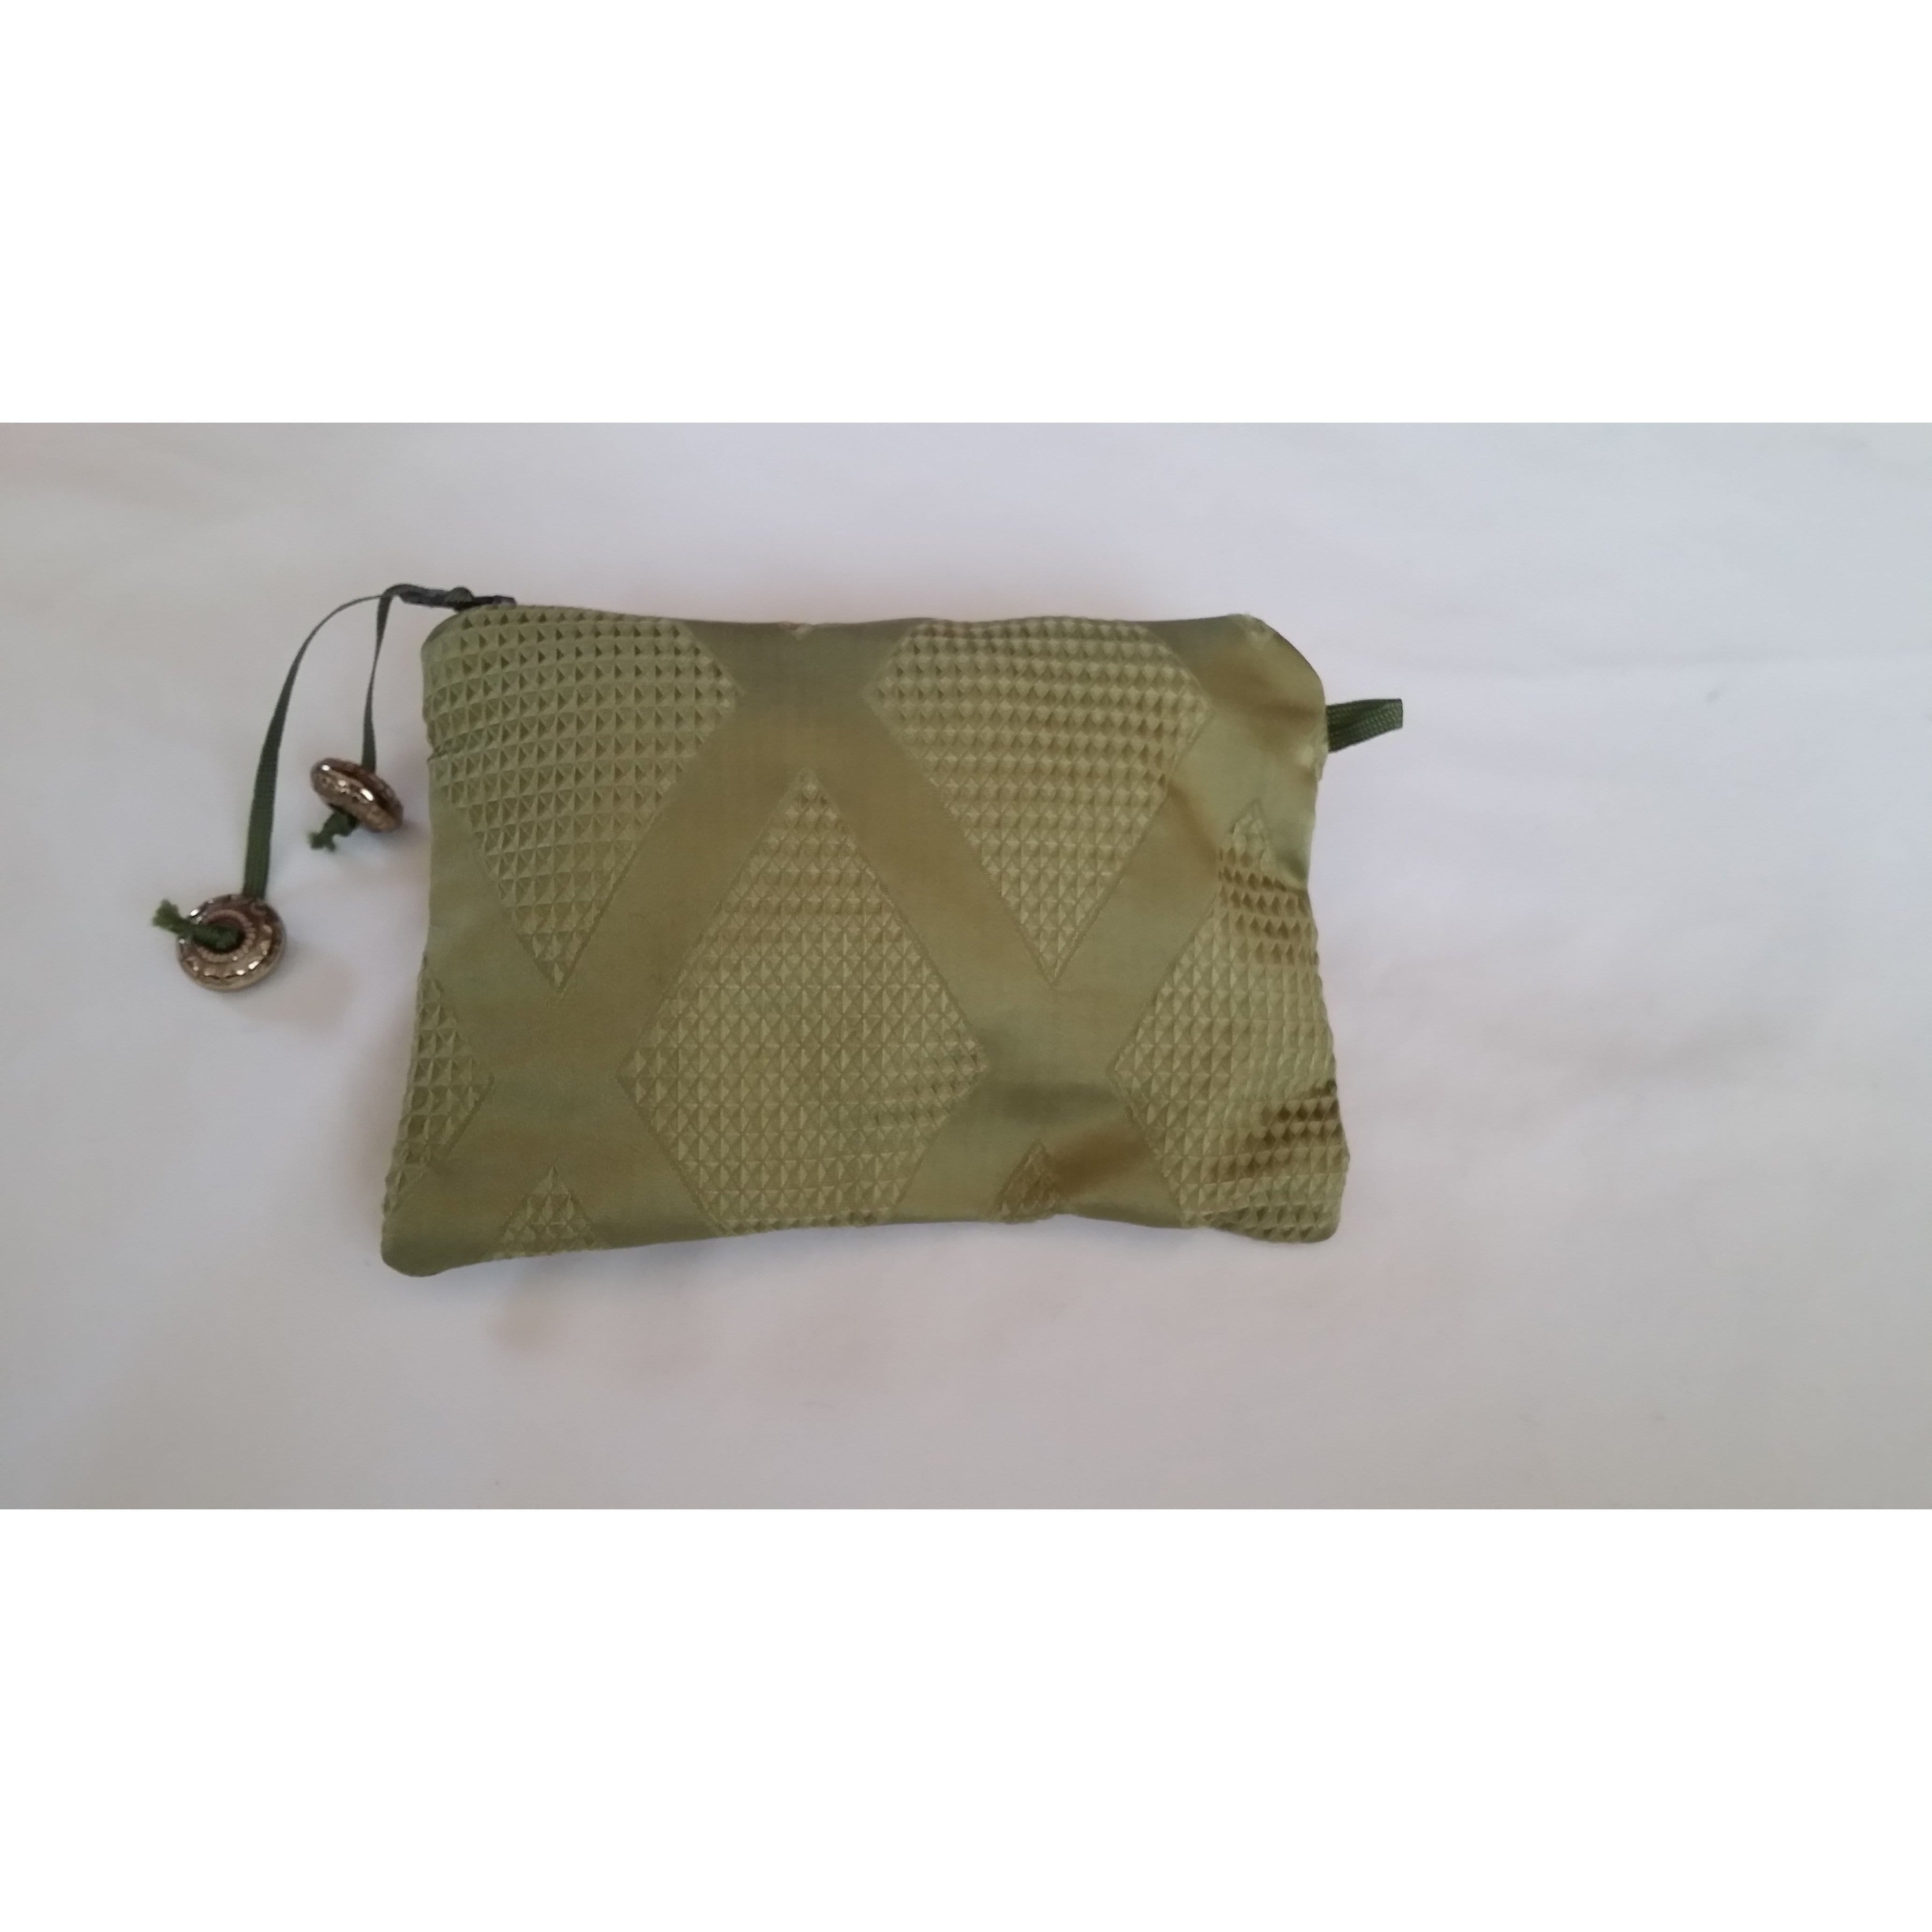 Bag Organiser- Make-up - Money- Small-100% Silk (except lining)- Gift Idea